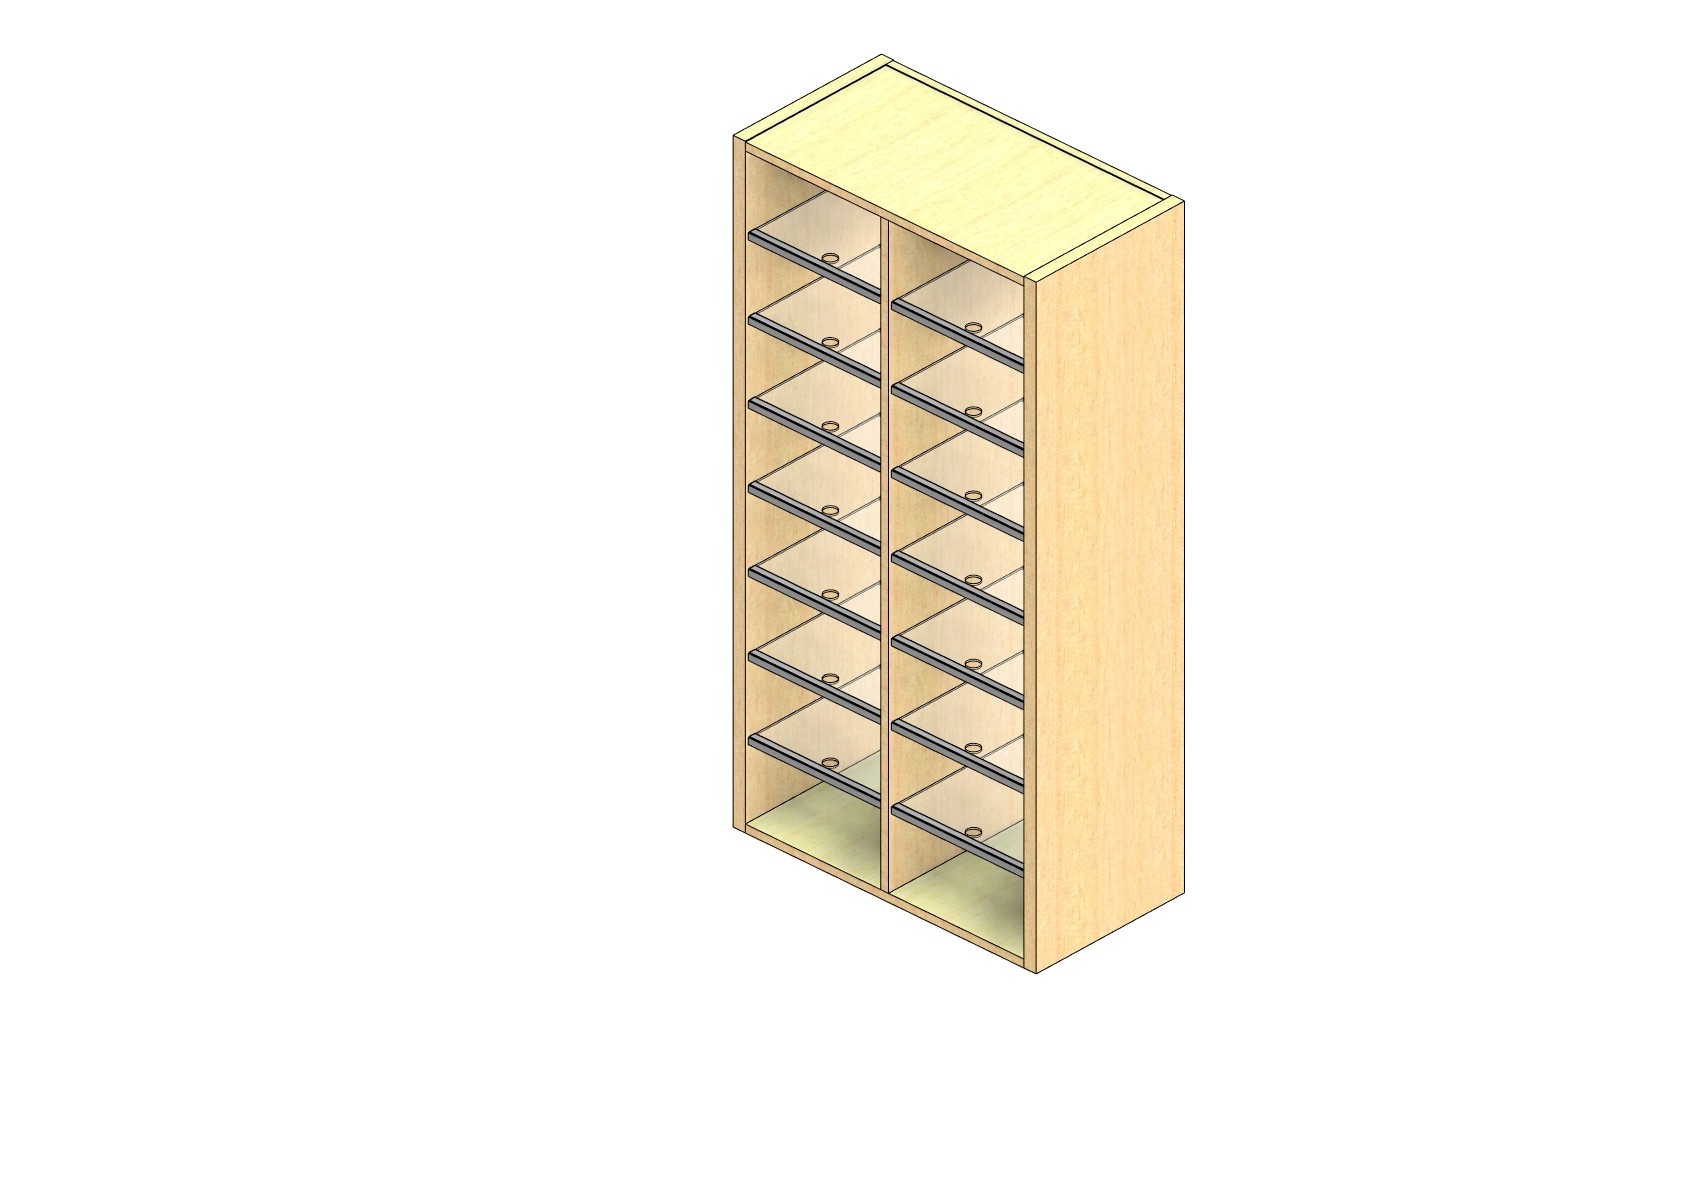 Standard Sized Open Back Sort Module - 2 Columns - 48" Sorting Height w/ No Riser